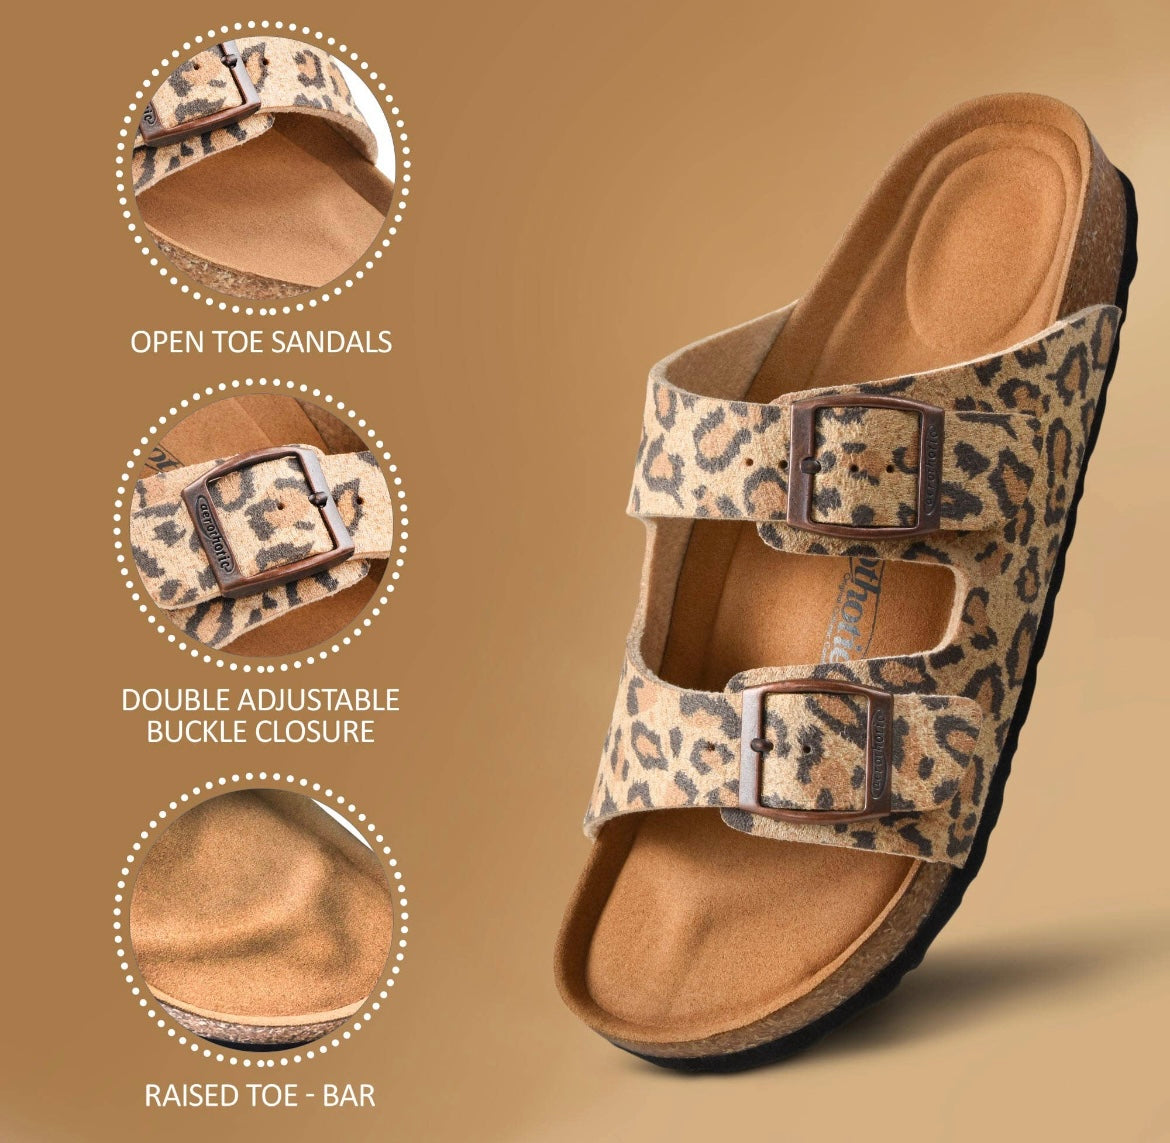 The Shoe Queen Sandal